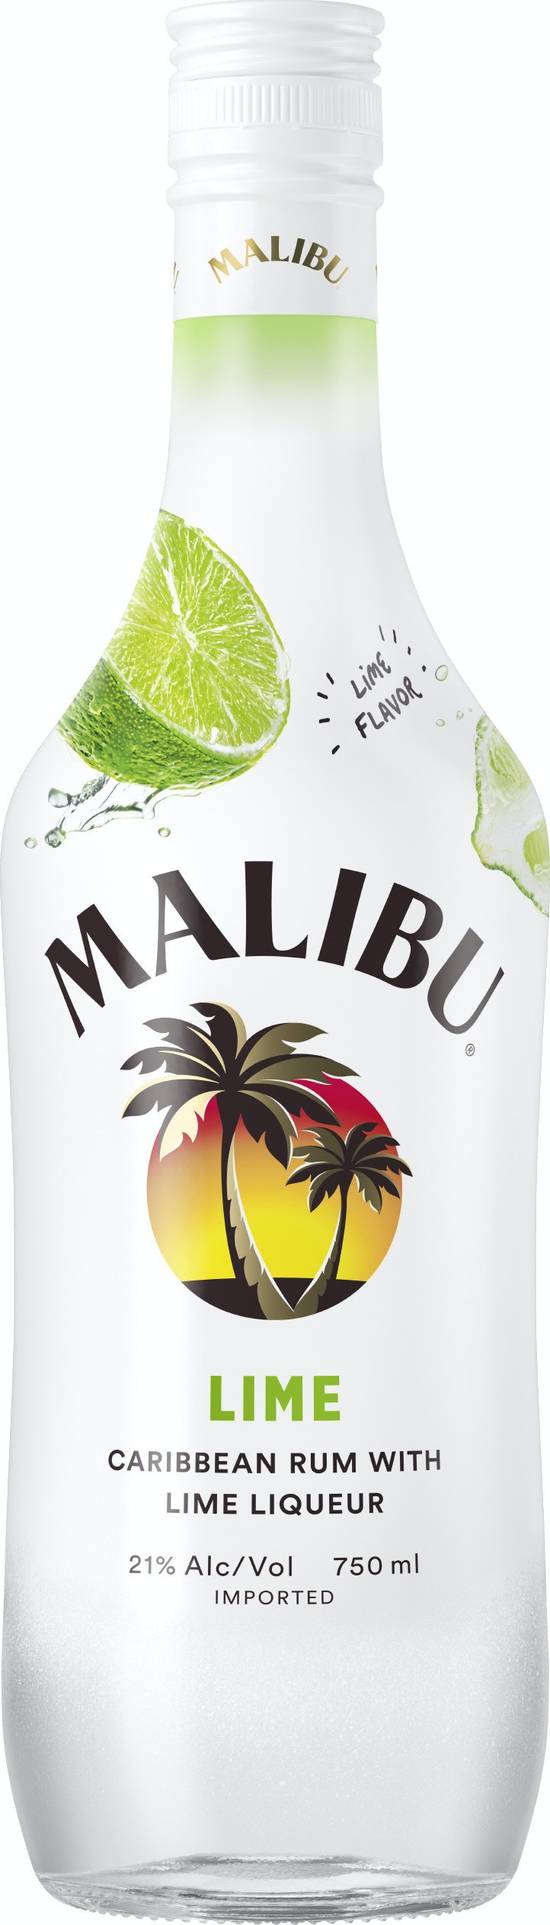 Malibu Lime Caribbean Rum Bottle (750 ml)